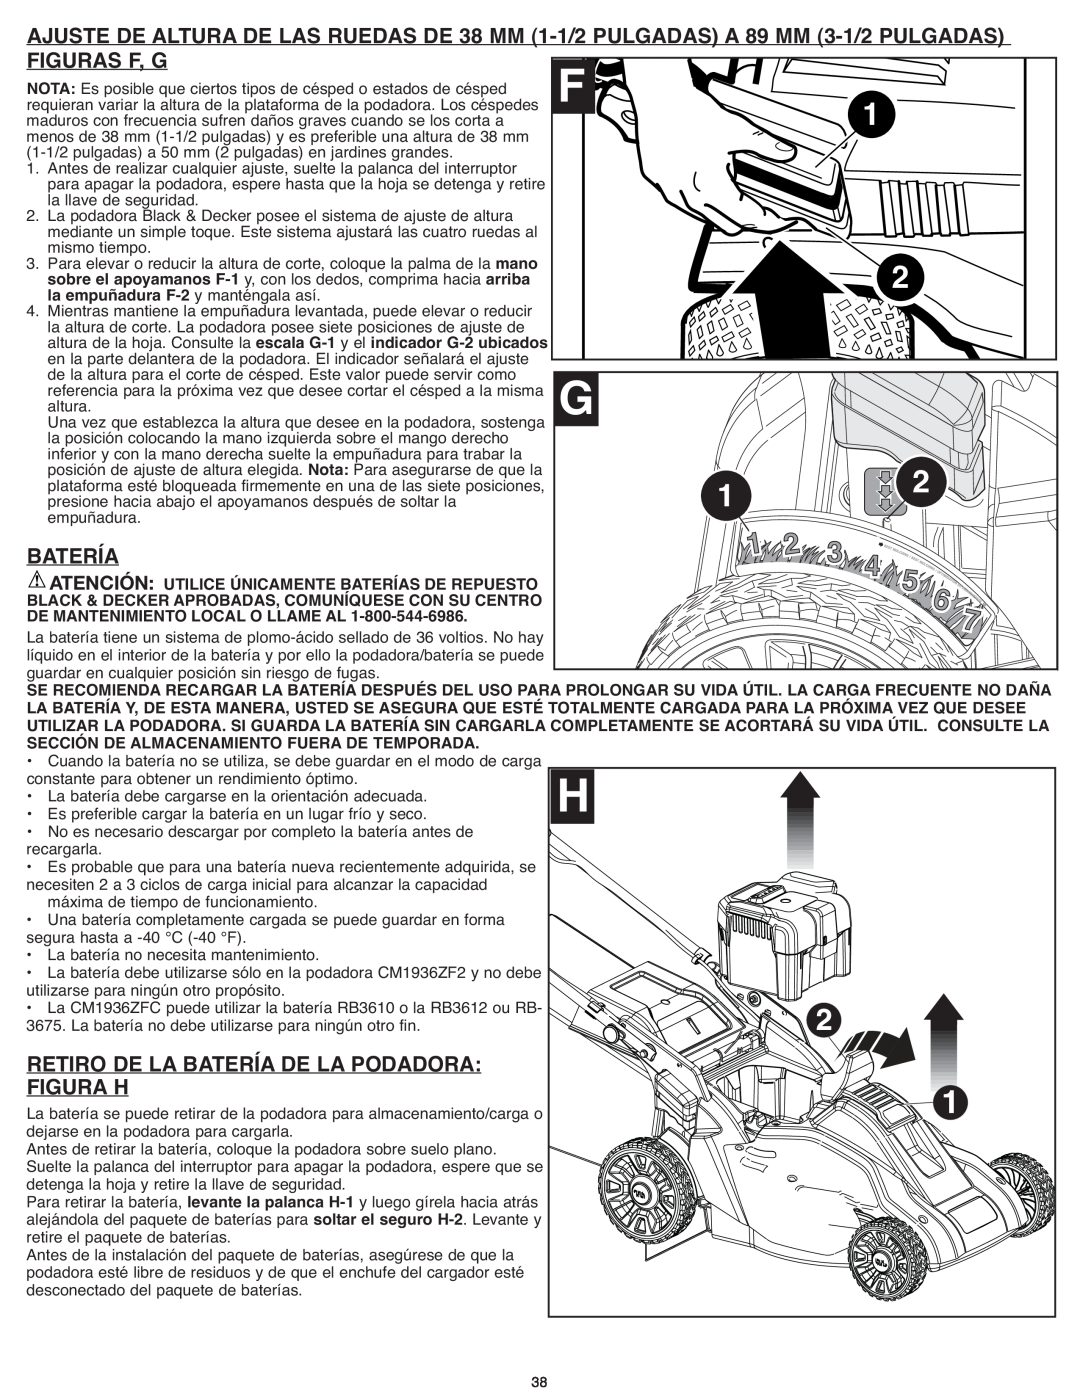 Black & Decker CM1936ZF2 instruction manual Figuras F, G, Retiro De La Batería De La Podadora, Figura H 